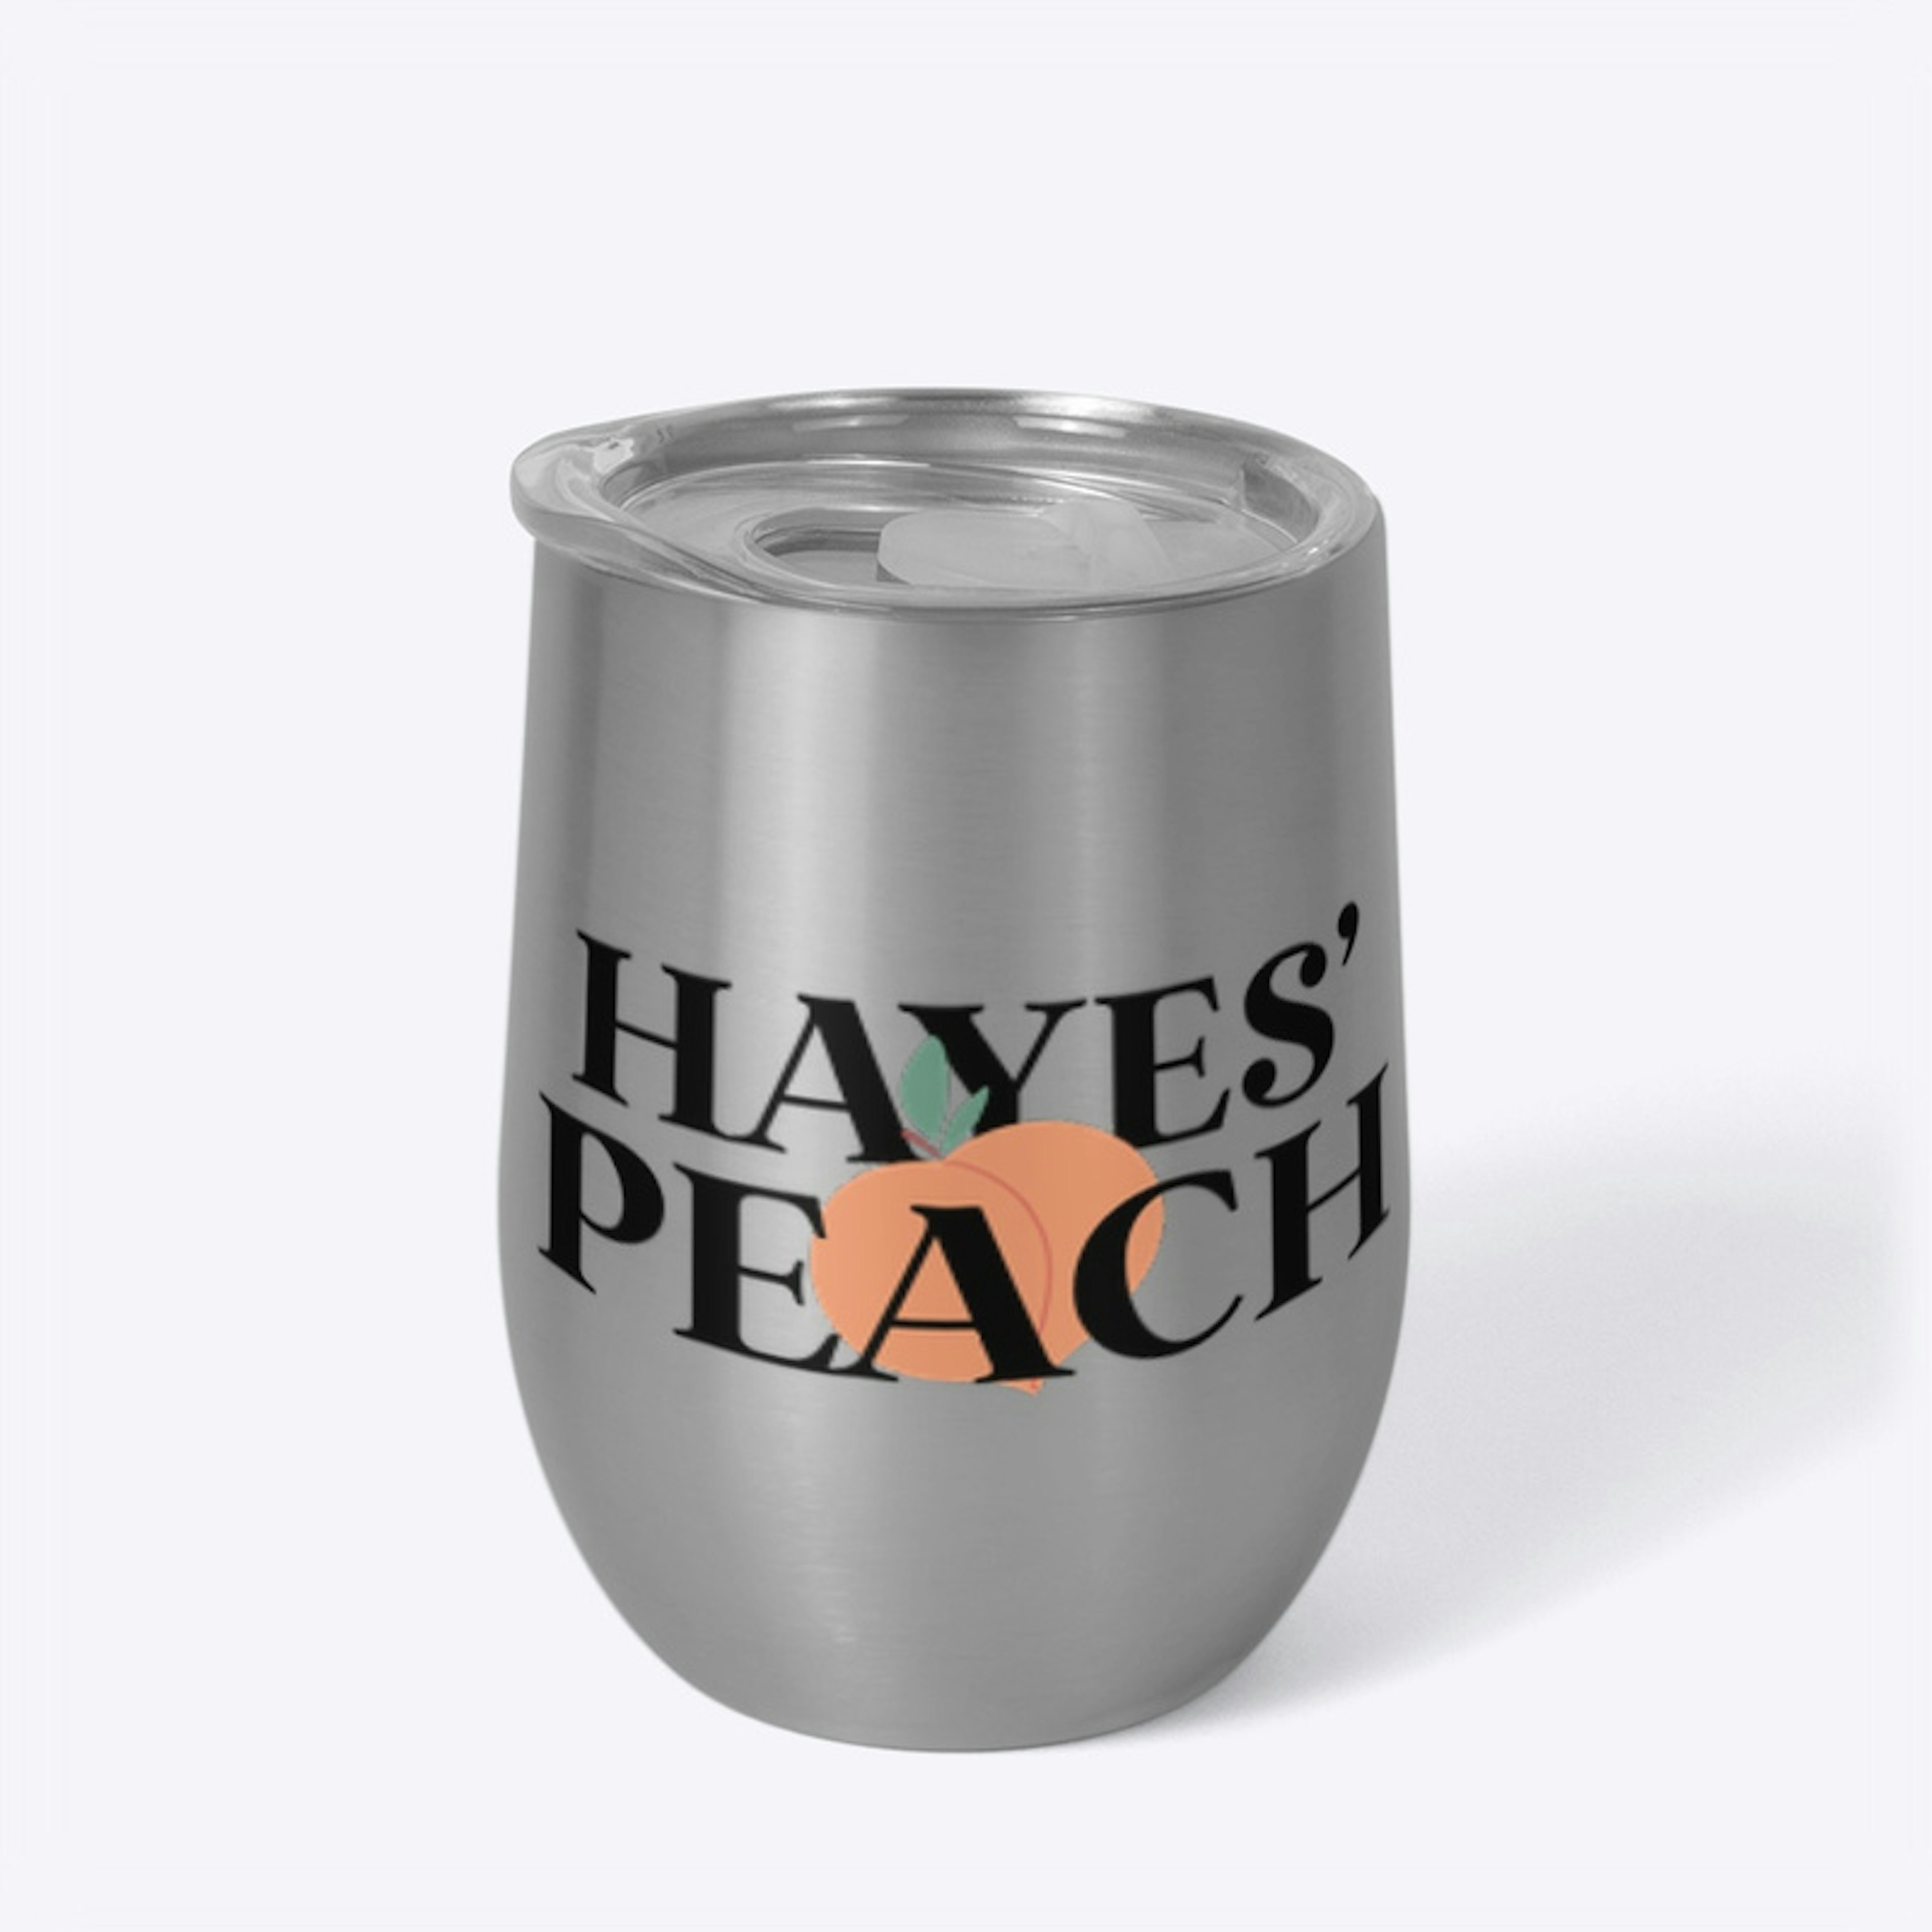 Hayes' Peach